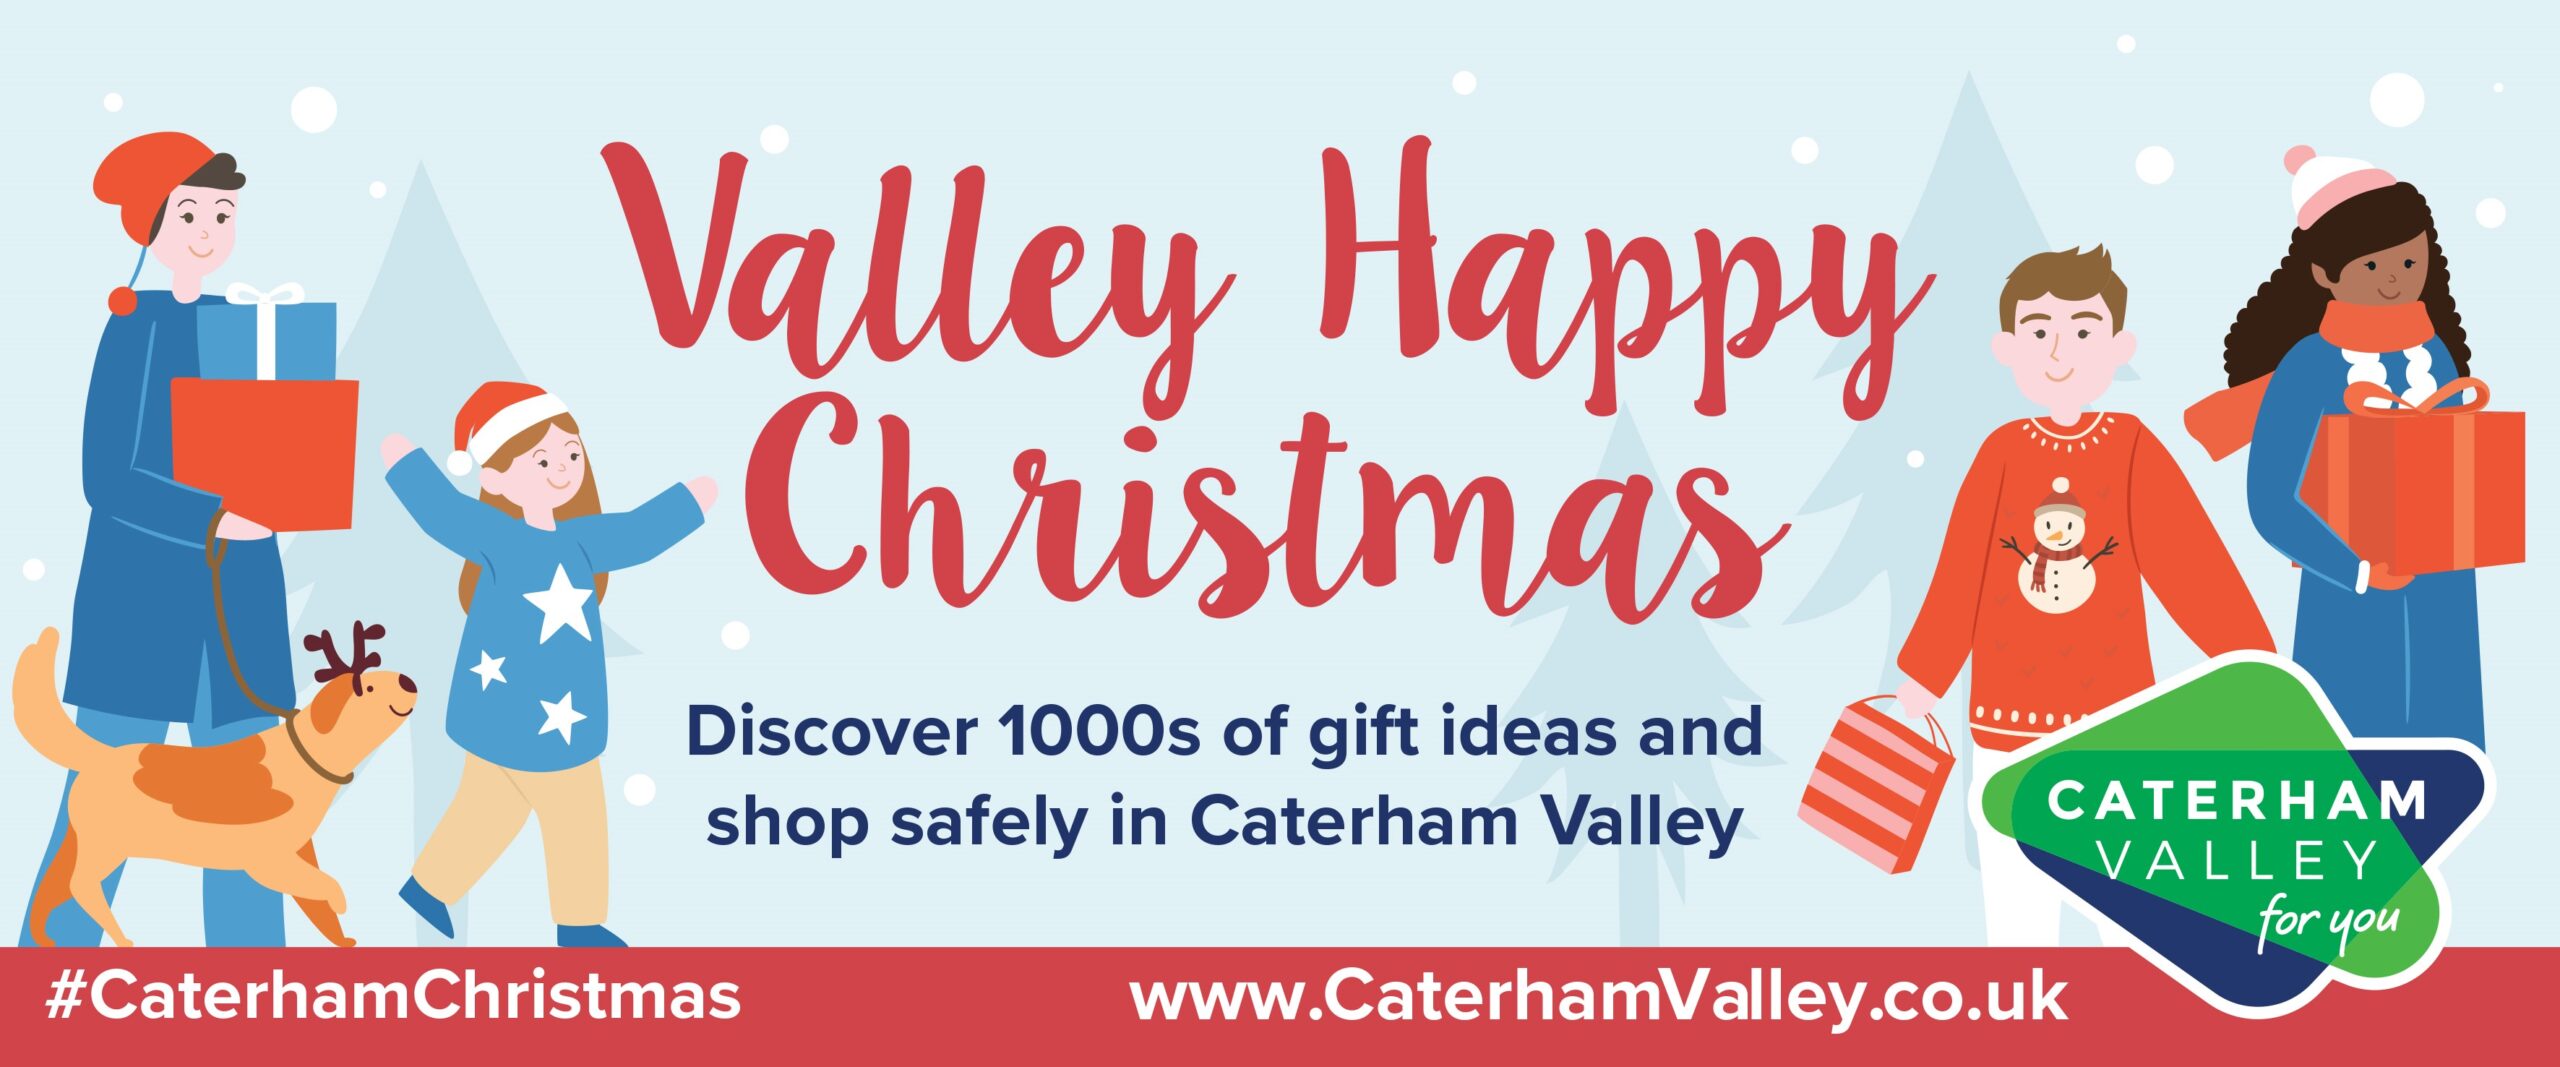 Christmas 2021 in Caterham Valley, Surrey banner